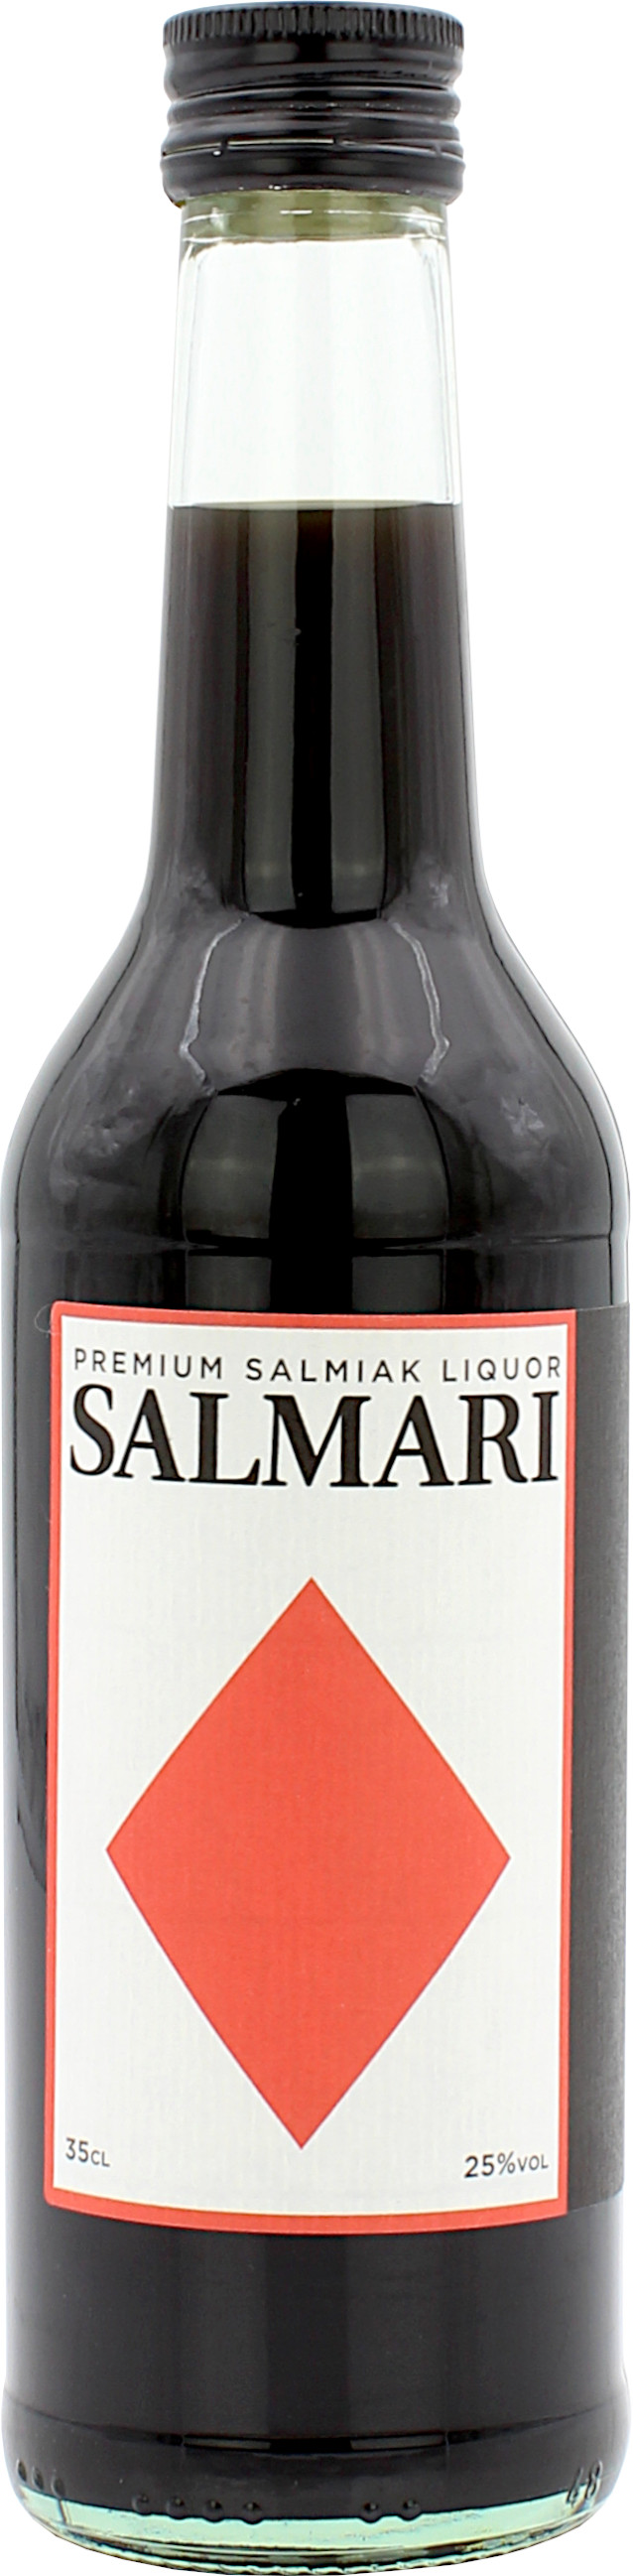 Salmari Premium Salmiak Lakritz Likör 25.0% 0,35l